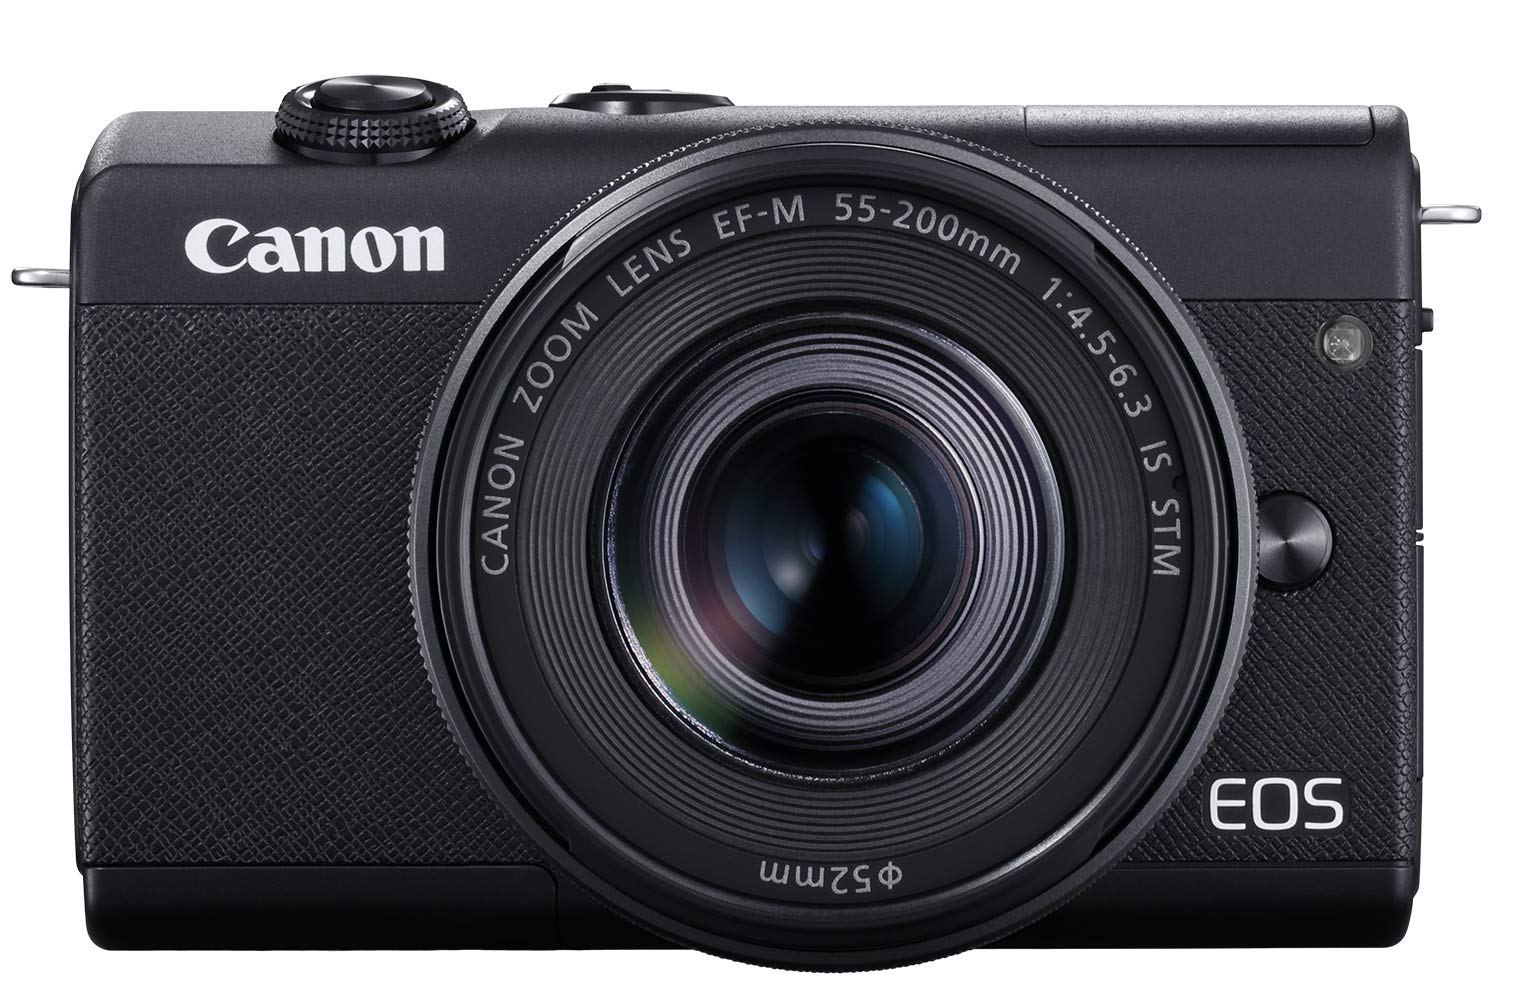  Canon كاميرا EOS M200 الرقمية المدمجة لمدونات الفيديو مع تصوير رأسي بدقة 4K وشاشة LCD تعمل باللمس مقاس 3.0 بوصات وشبكة...